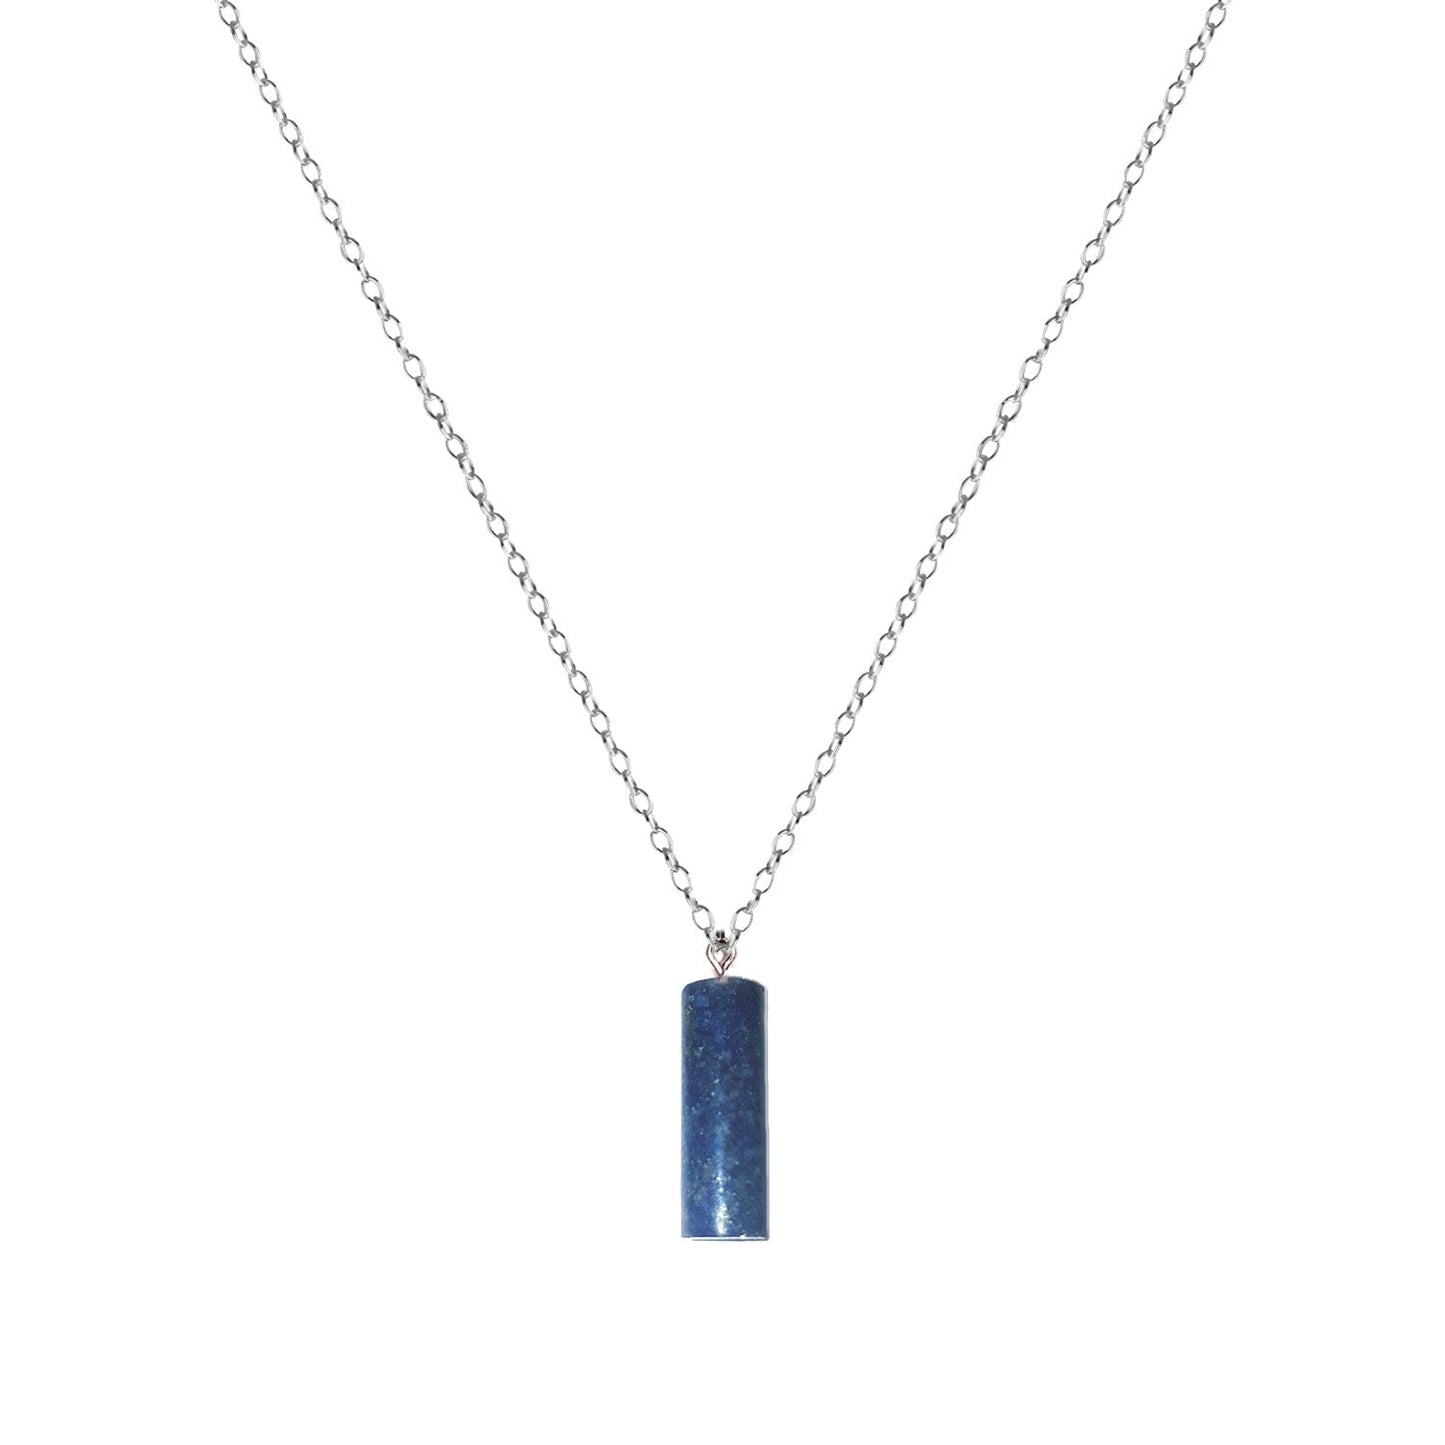 Lapis Lazuli Necklace, Lapis Lazuli Pendant, Sterling Silver Necklace, Gemstone Pendant Necklace | by nlanlaVictory-5